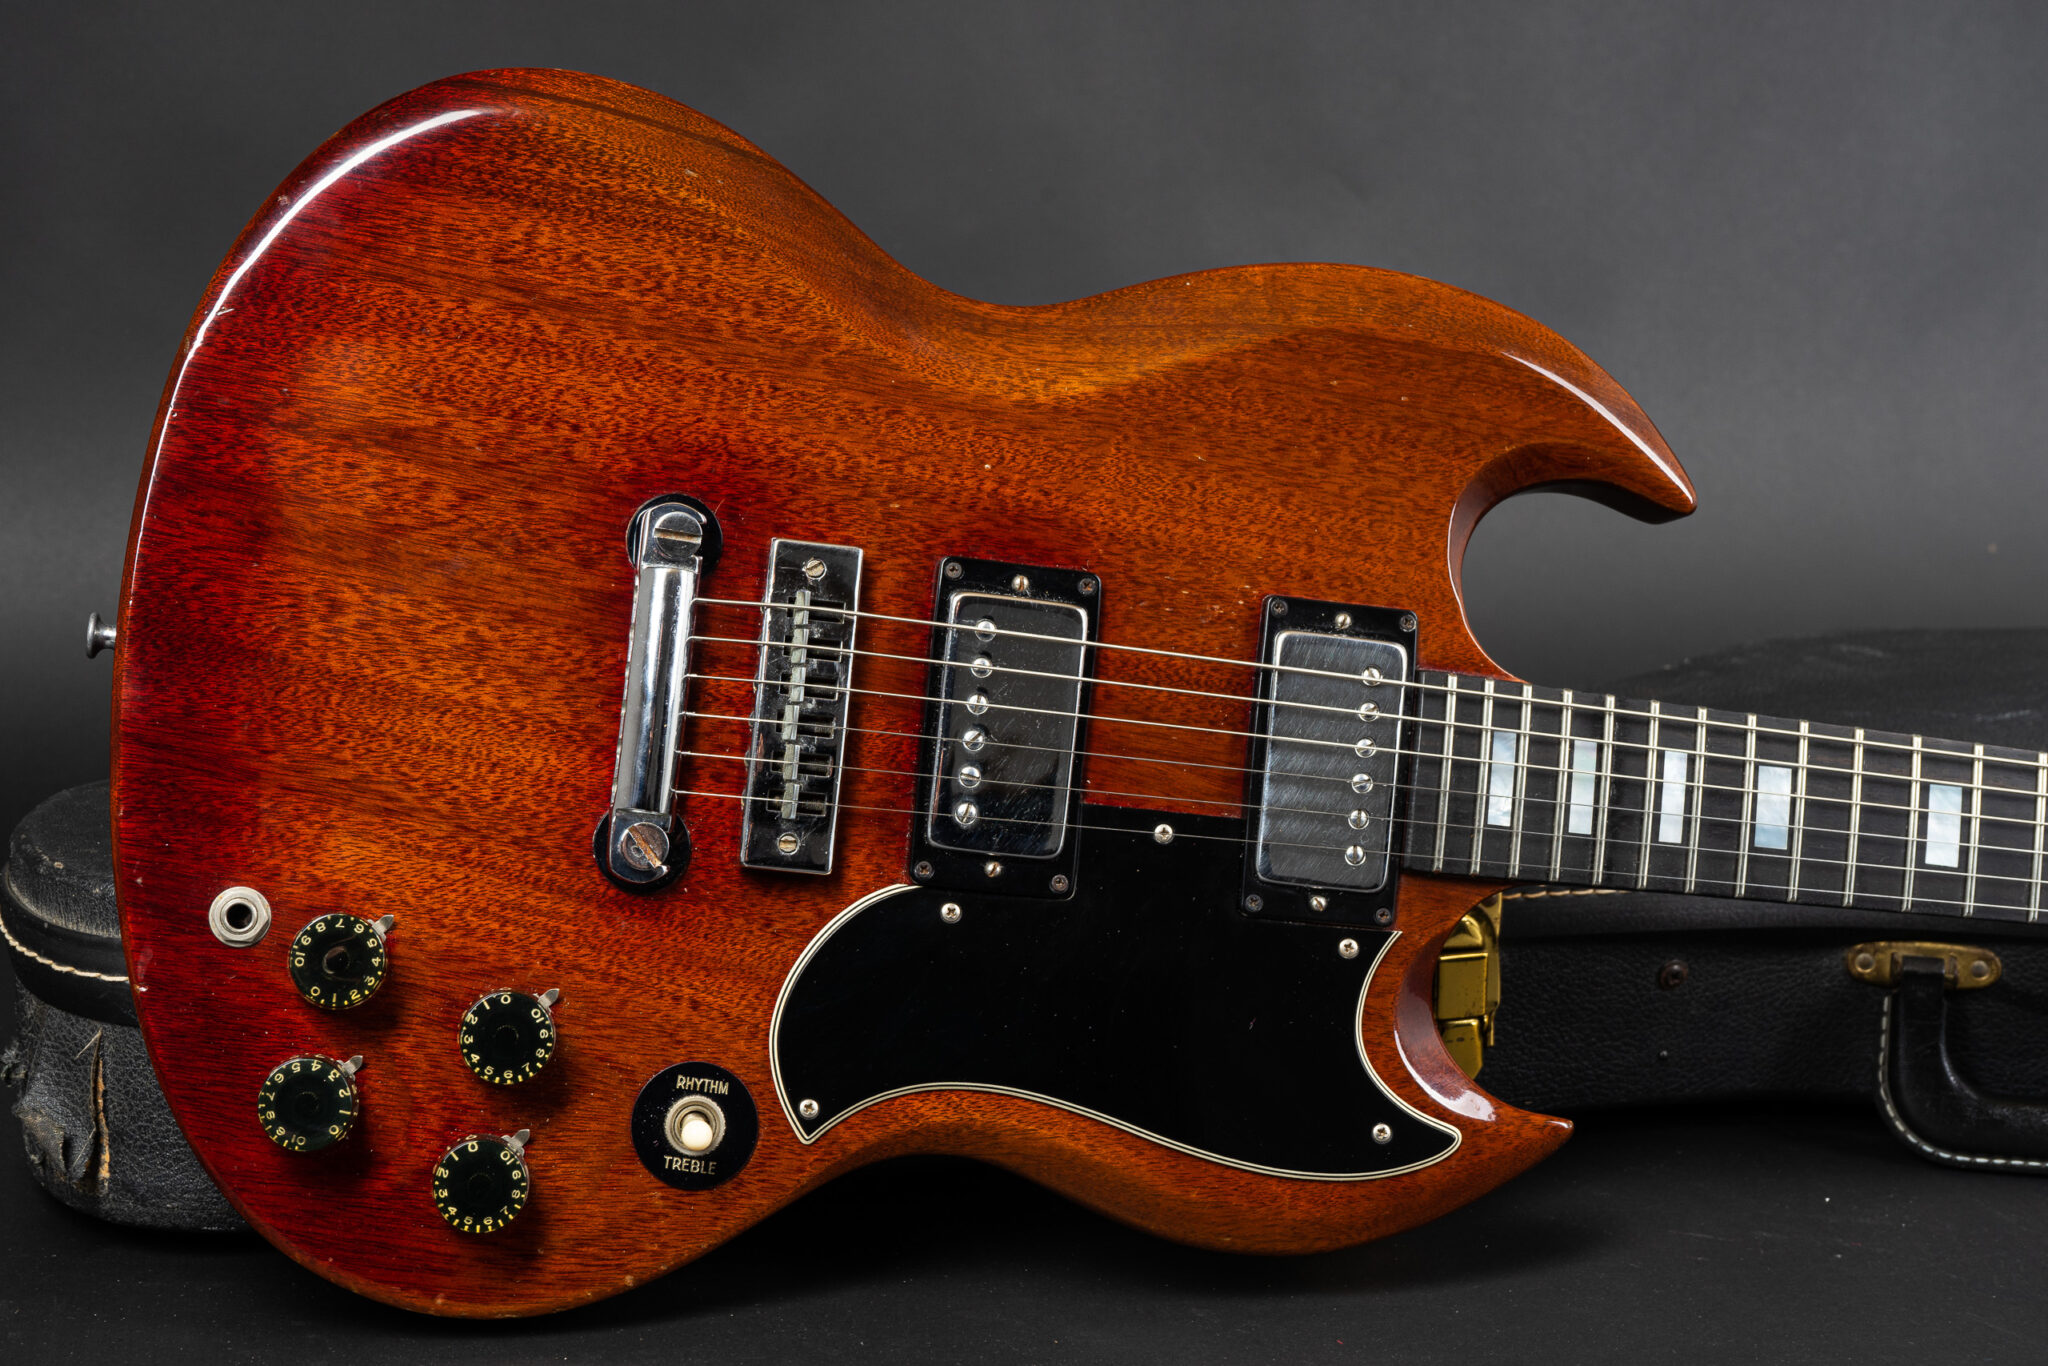 https://guitarpoint.de/app/uploads/products/1973-gibson-sg-standard-cherry-clean-and-only-309kg/1973-Gibson-SG-Standard-171823-9-2048x1366.jpg